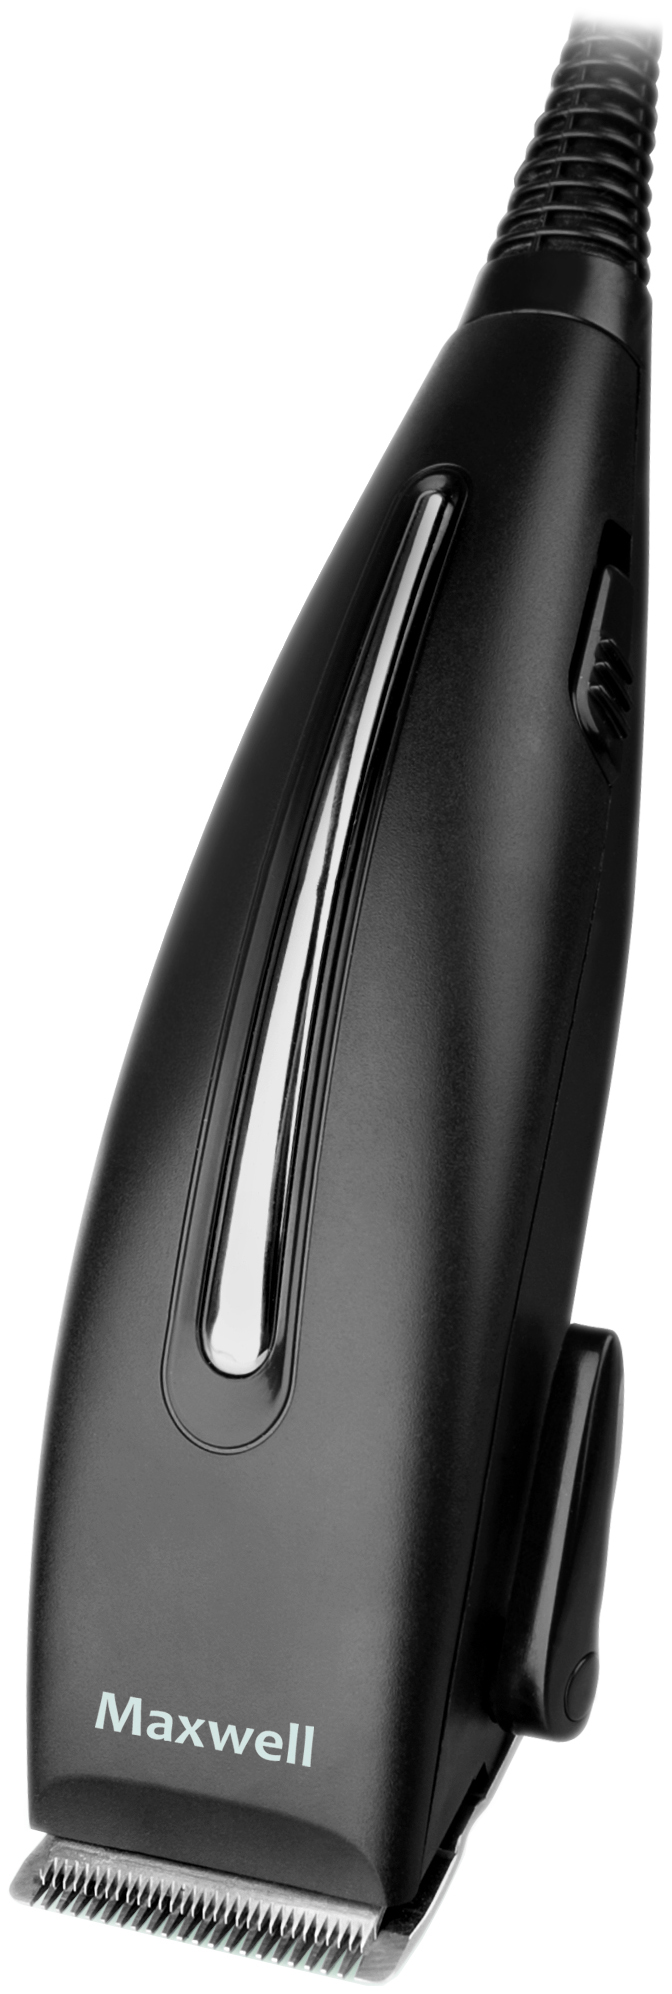 Машинка для стрижки волос Maxwell MW-2112 паста для волос syoss 100мл моделирующая легкий контроль